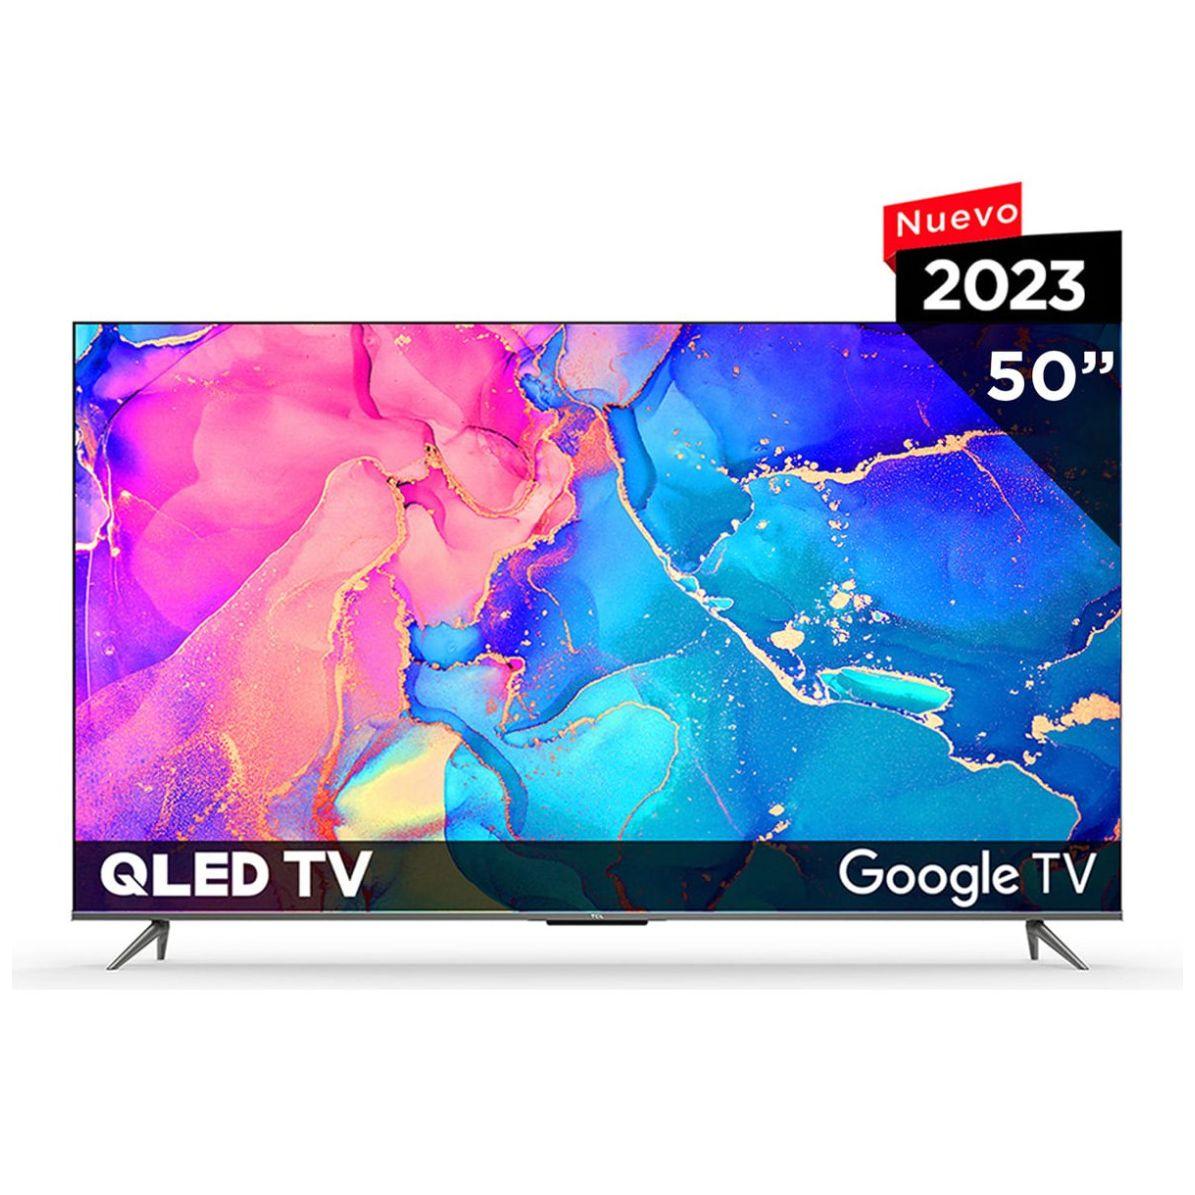 QLED 4K TCL 50" SMART TV | Google Tv | Hands Free Voice Control | DiseÃ±o Slim sin bordes | Sonido AtmosfÃ©rico Envolvente - 50T554